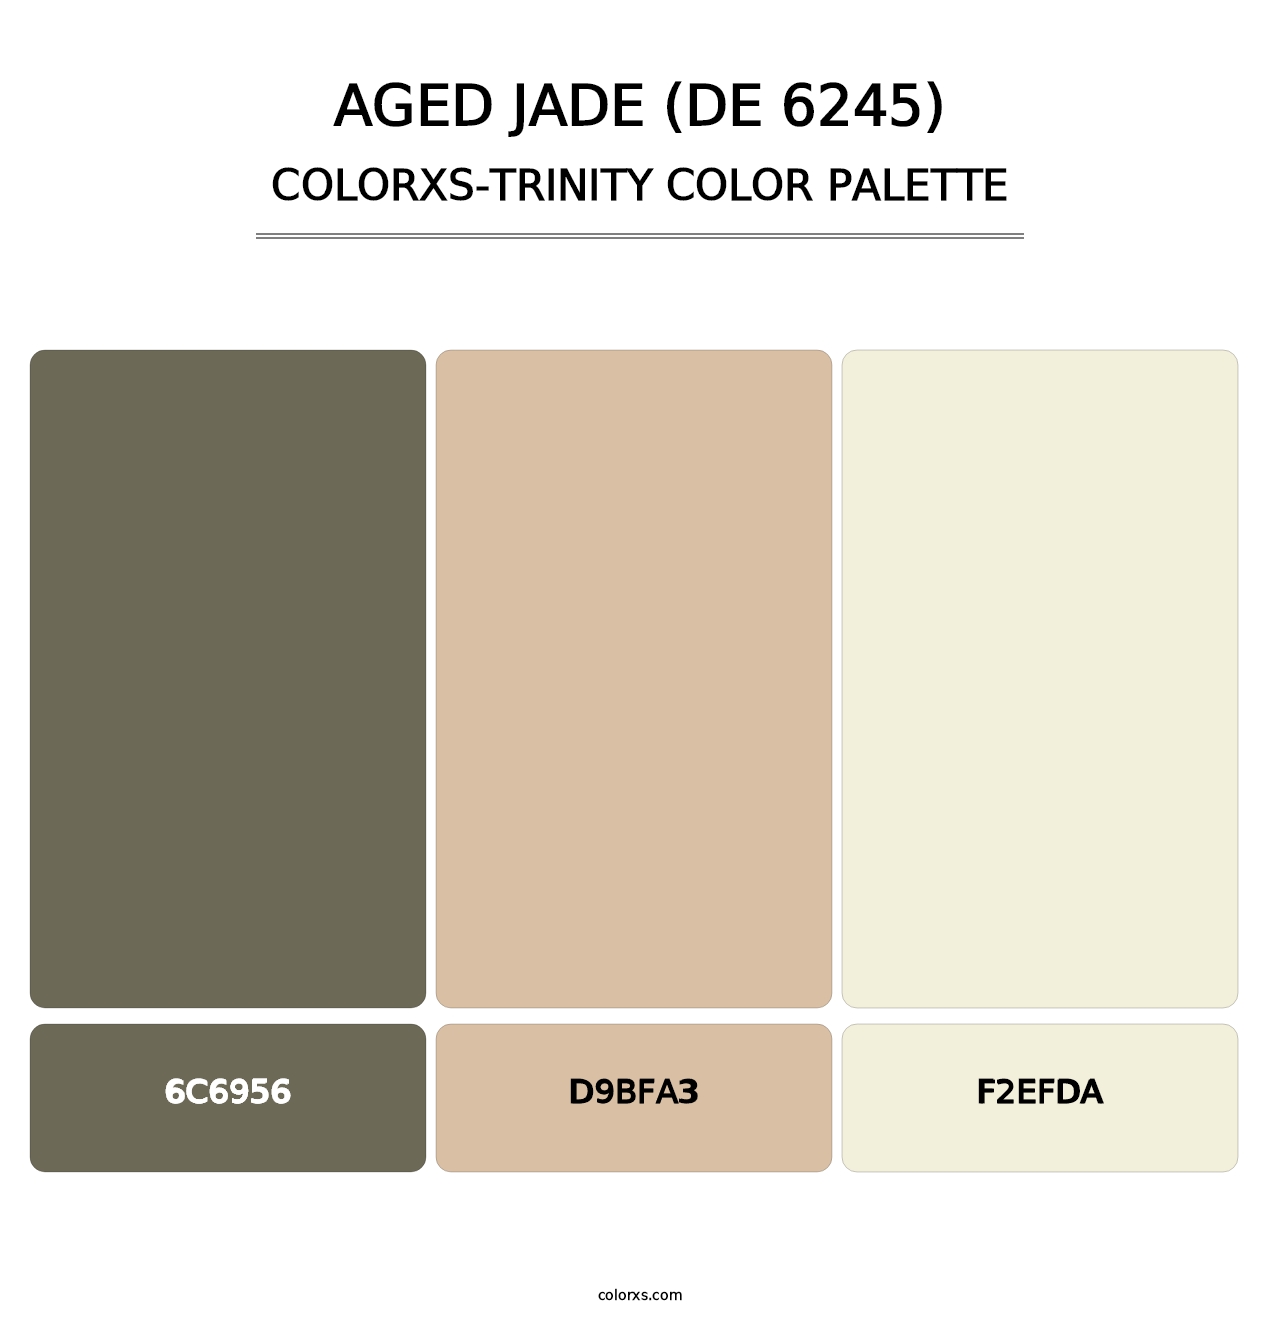 Aged Jade (DE 6245) - Colorxs Trinity Palette